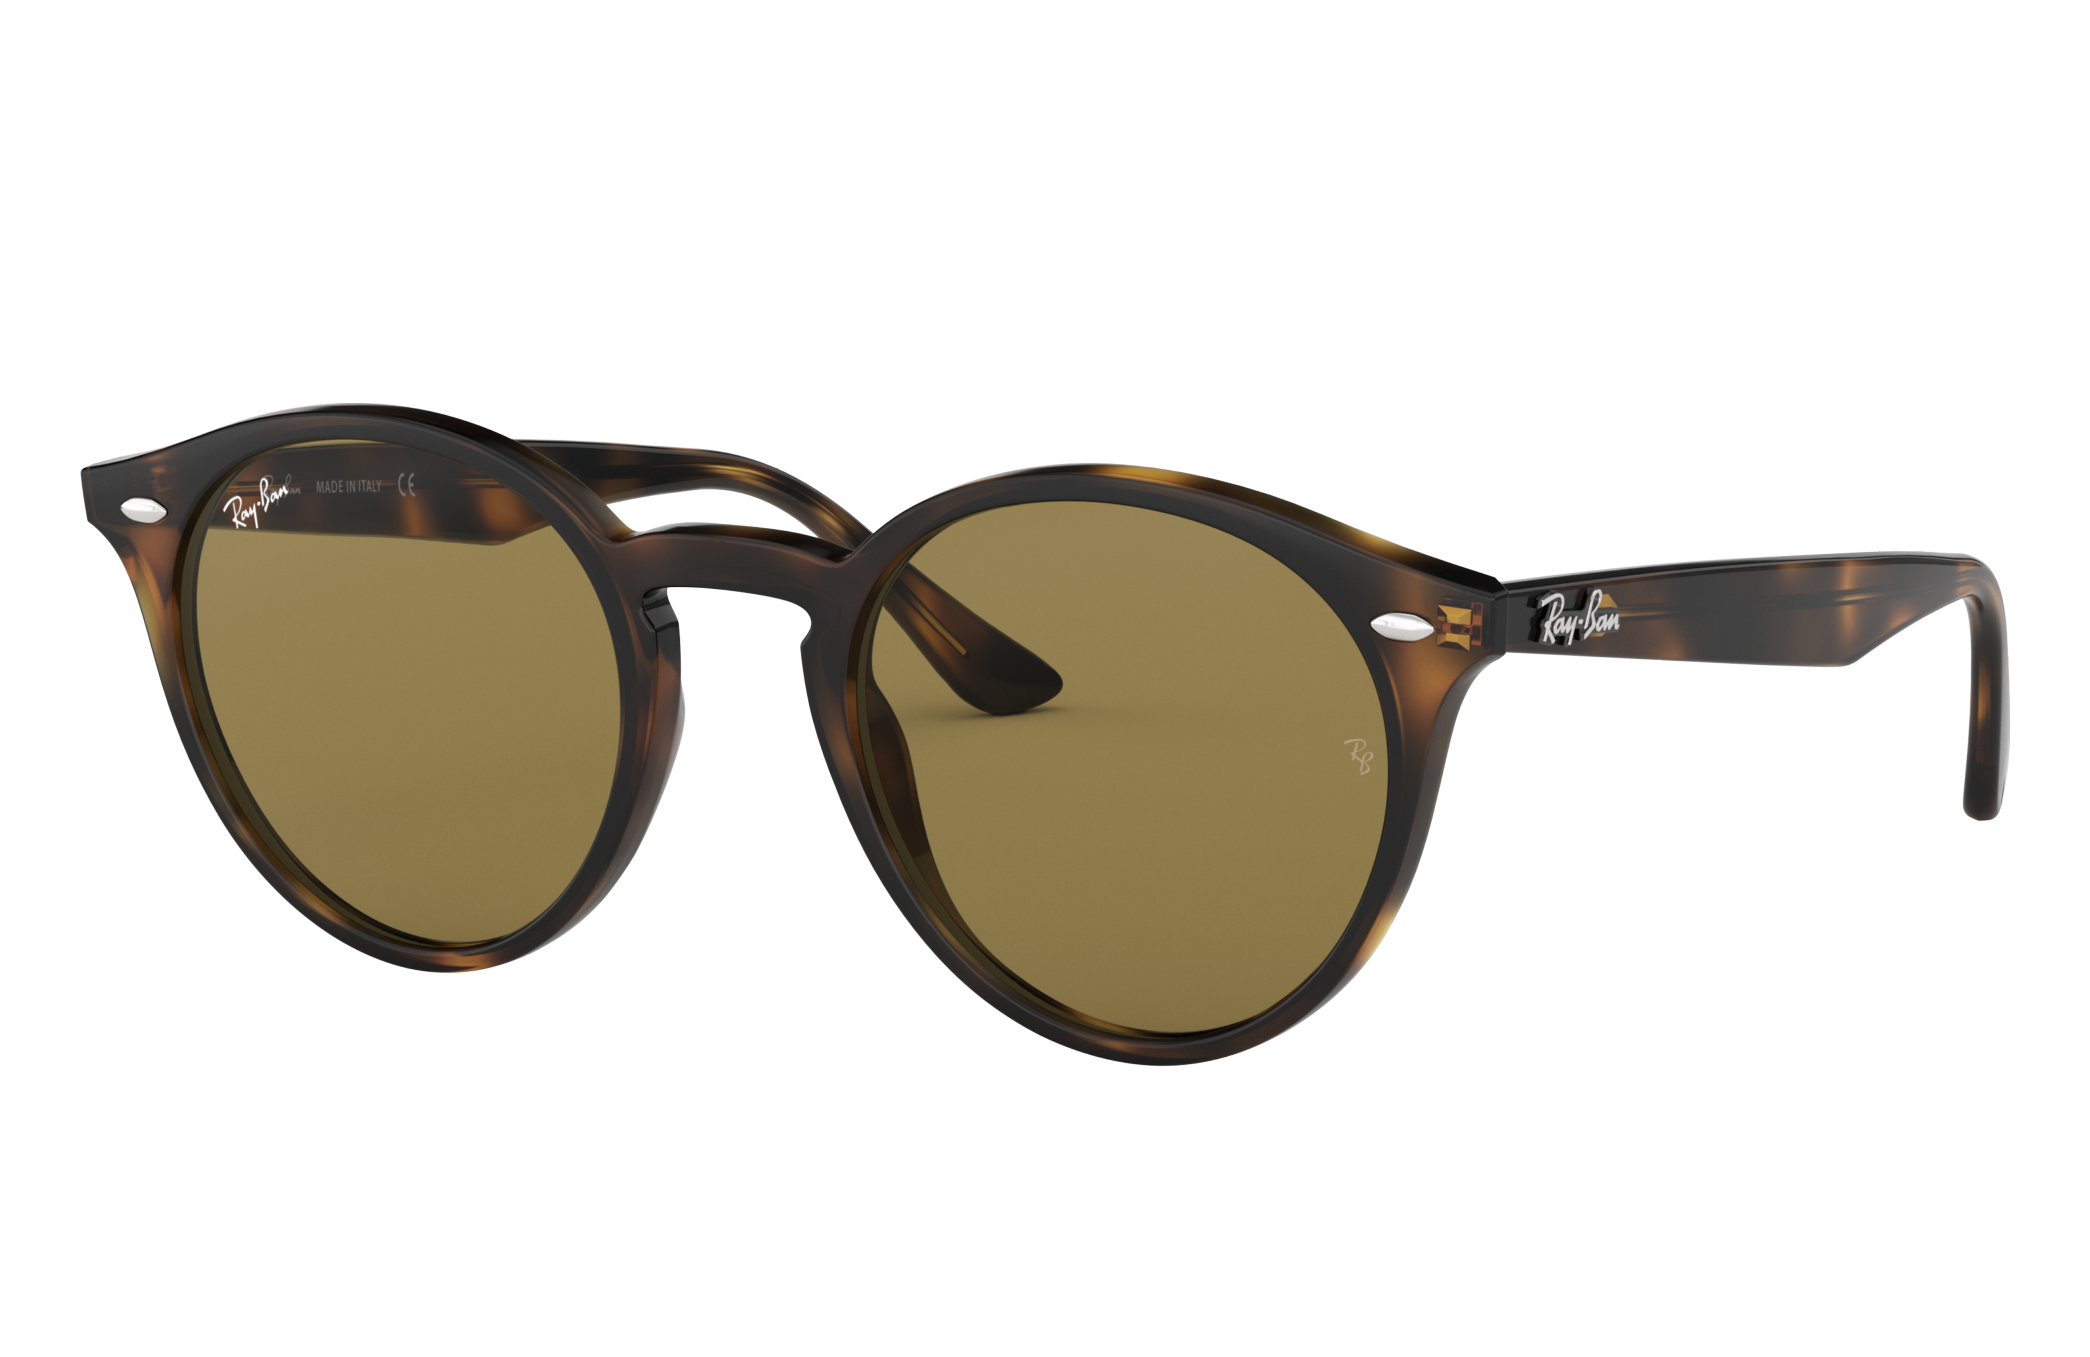 shell Thigh Burma Rb2180 Sunglasses in Light Havana and Dark Brown | Ray-Ban®